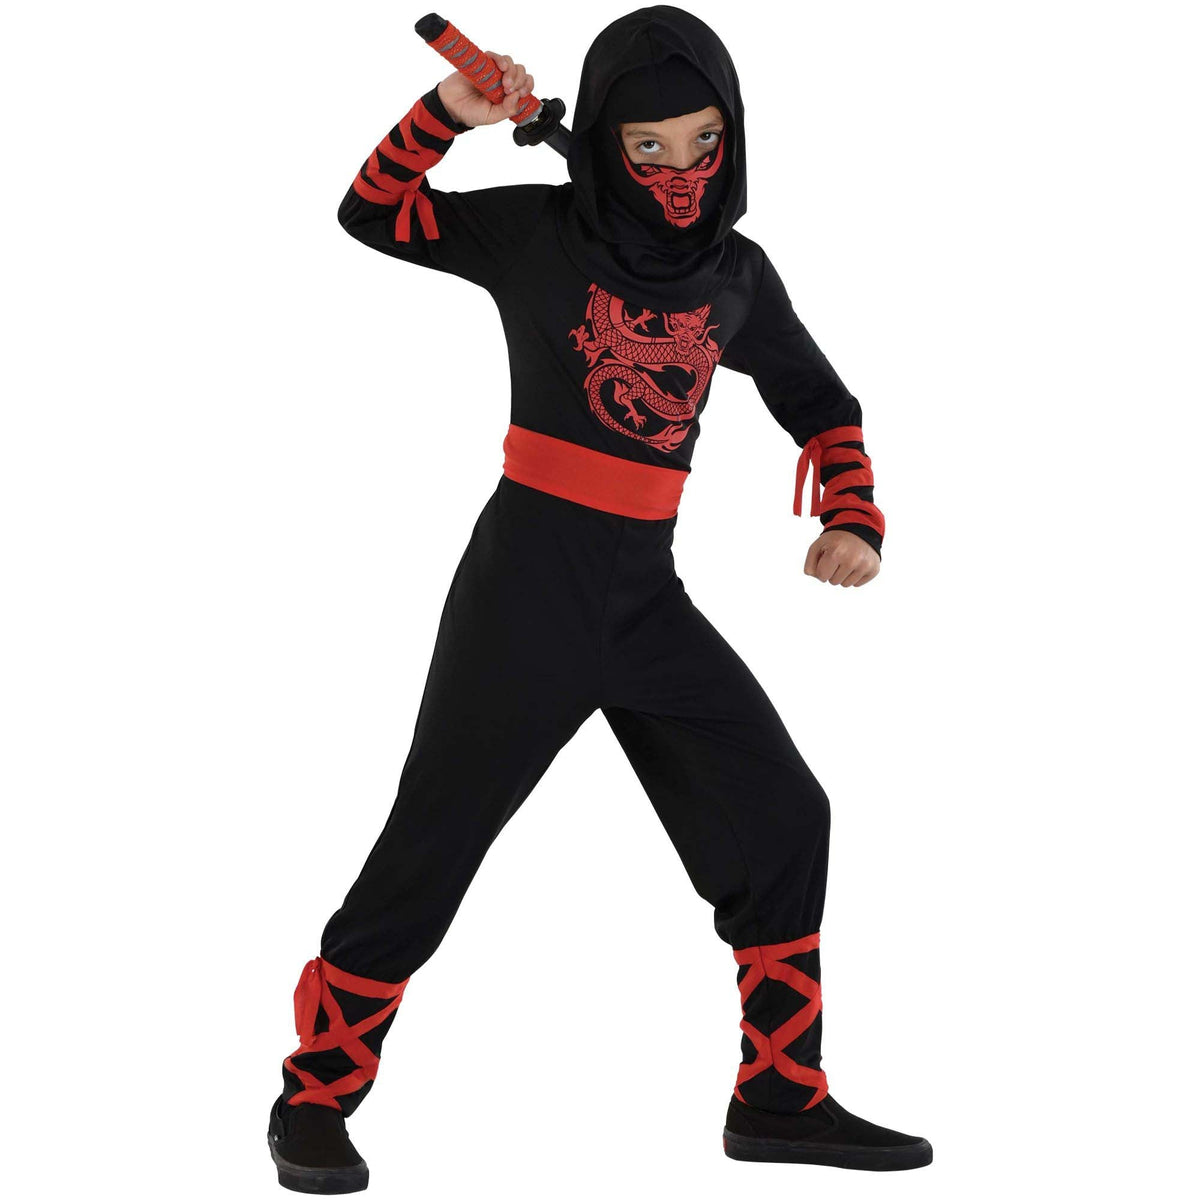 HALLOWEEN COSTUME CO. Costumes Blood Dragon Ninja Costume for Kids